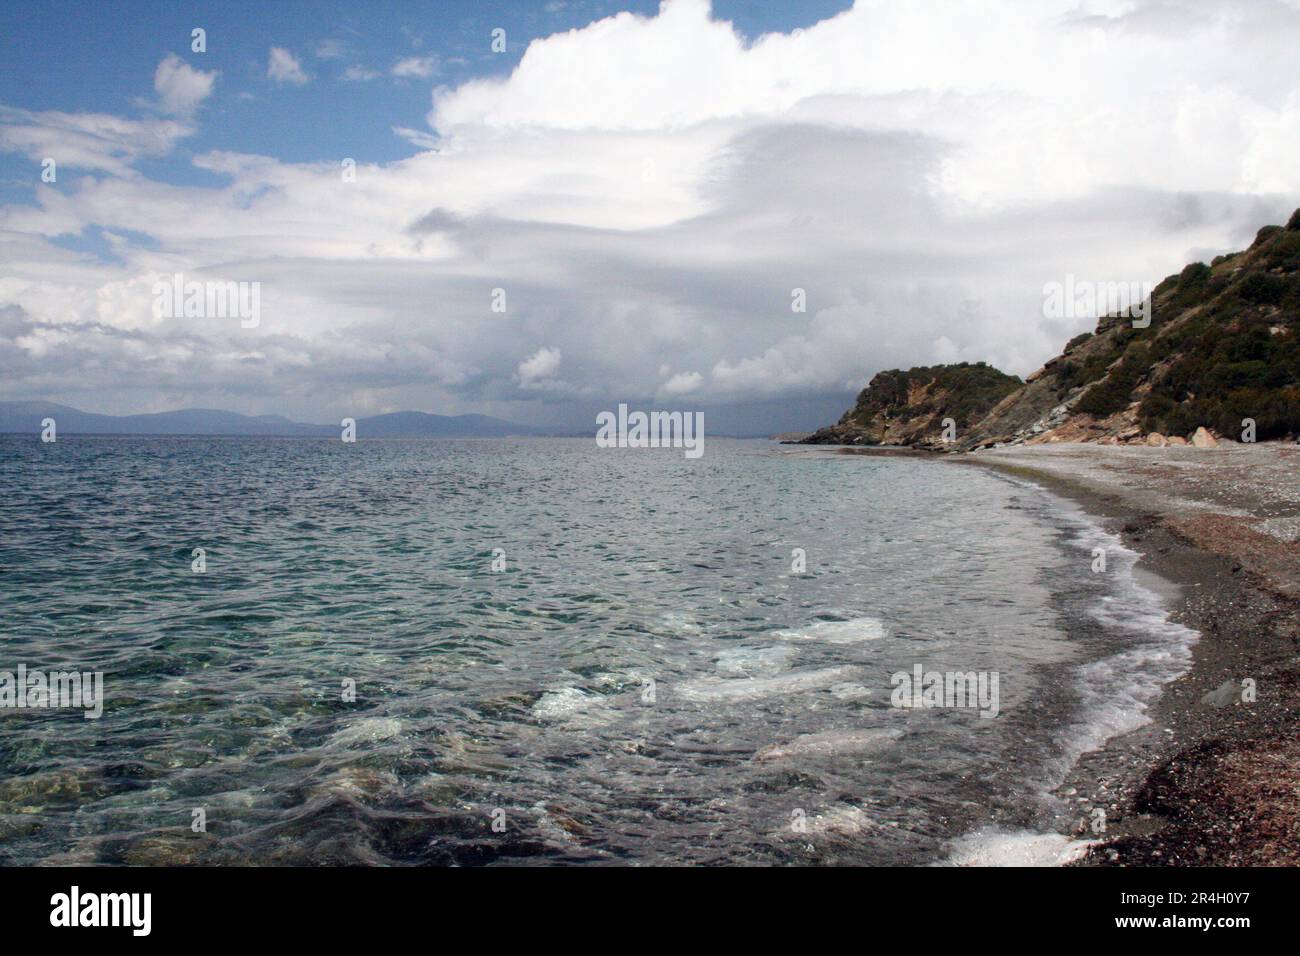 Rocky coast beach island on Aegean Mediterranean Sea cloudy sky reflection on water wave natural coastline seashore panoramic view Stock Photo